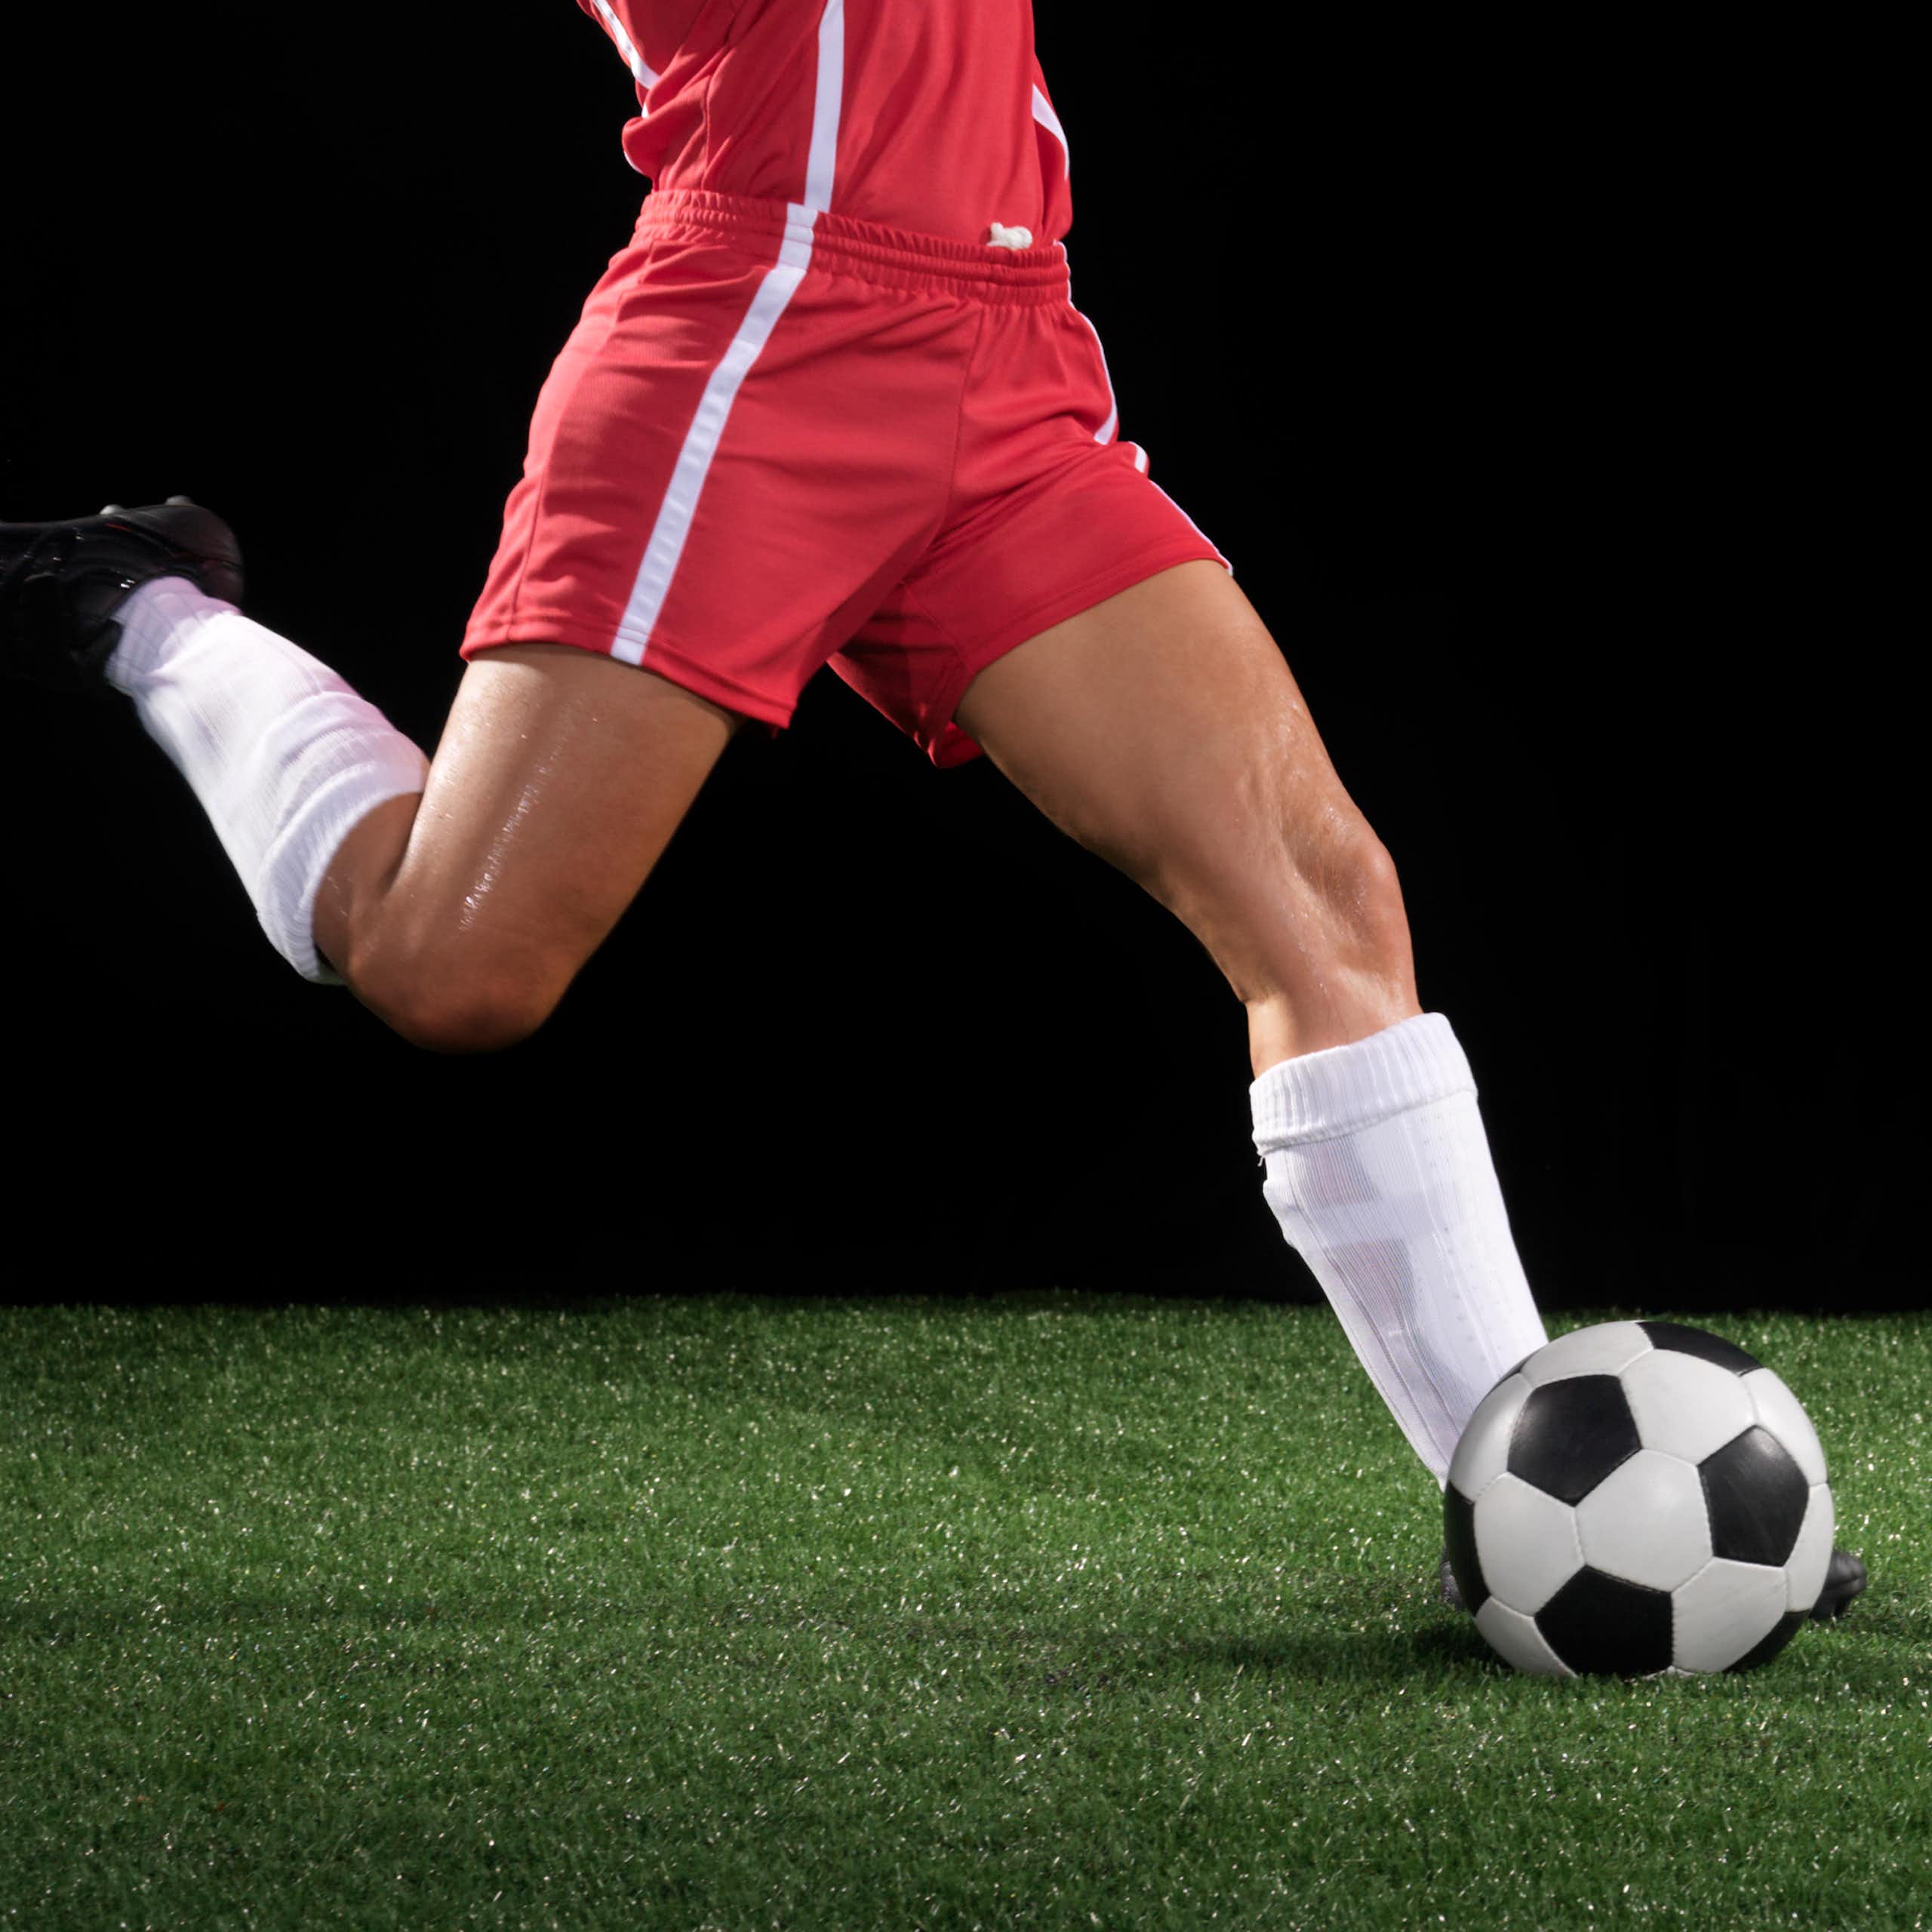 A leg kicks a soccer ball.